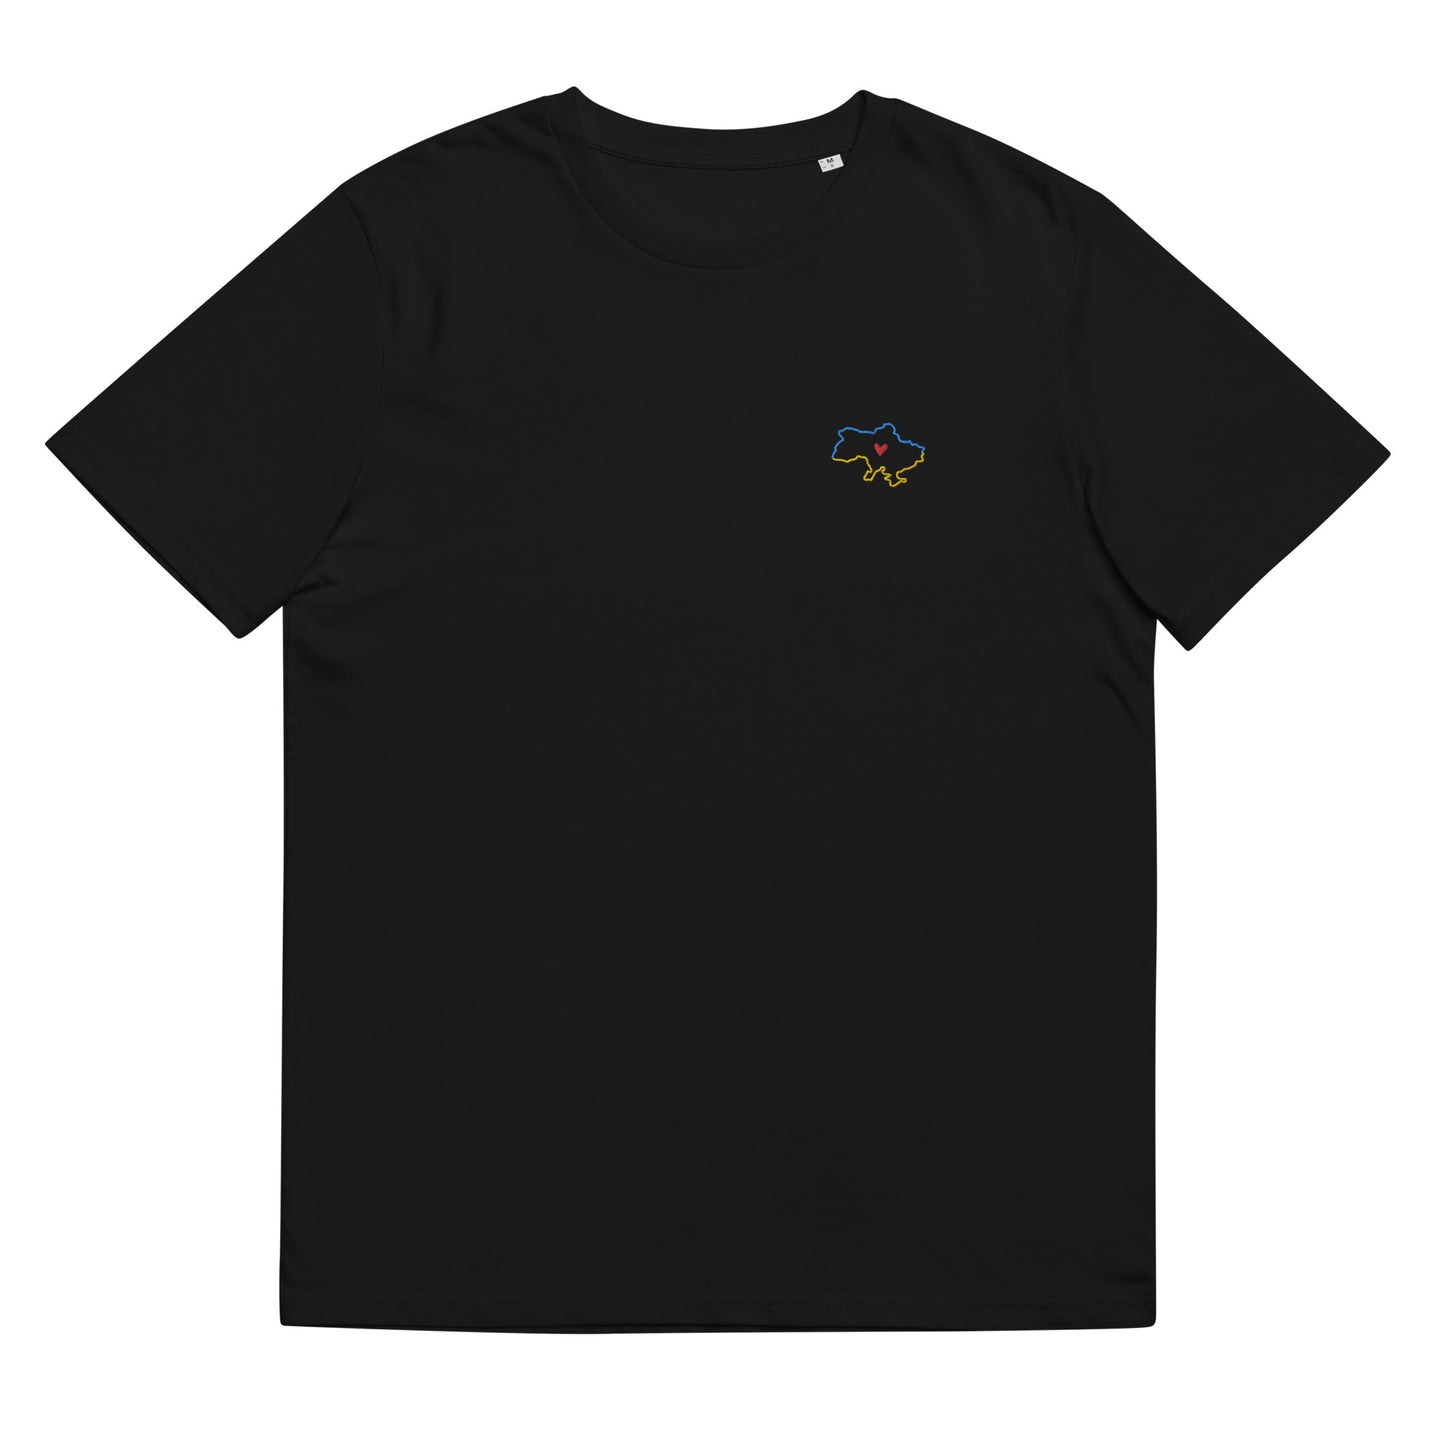 Ukrainian map unisex embroidered organic cotton t-shirt in black